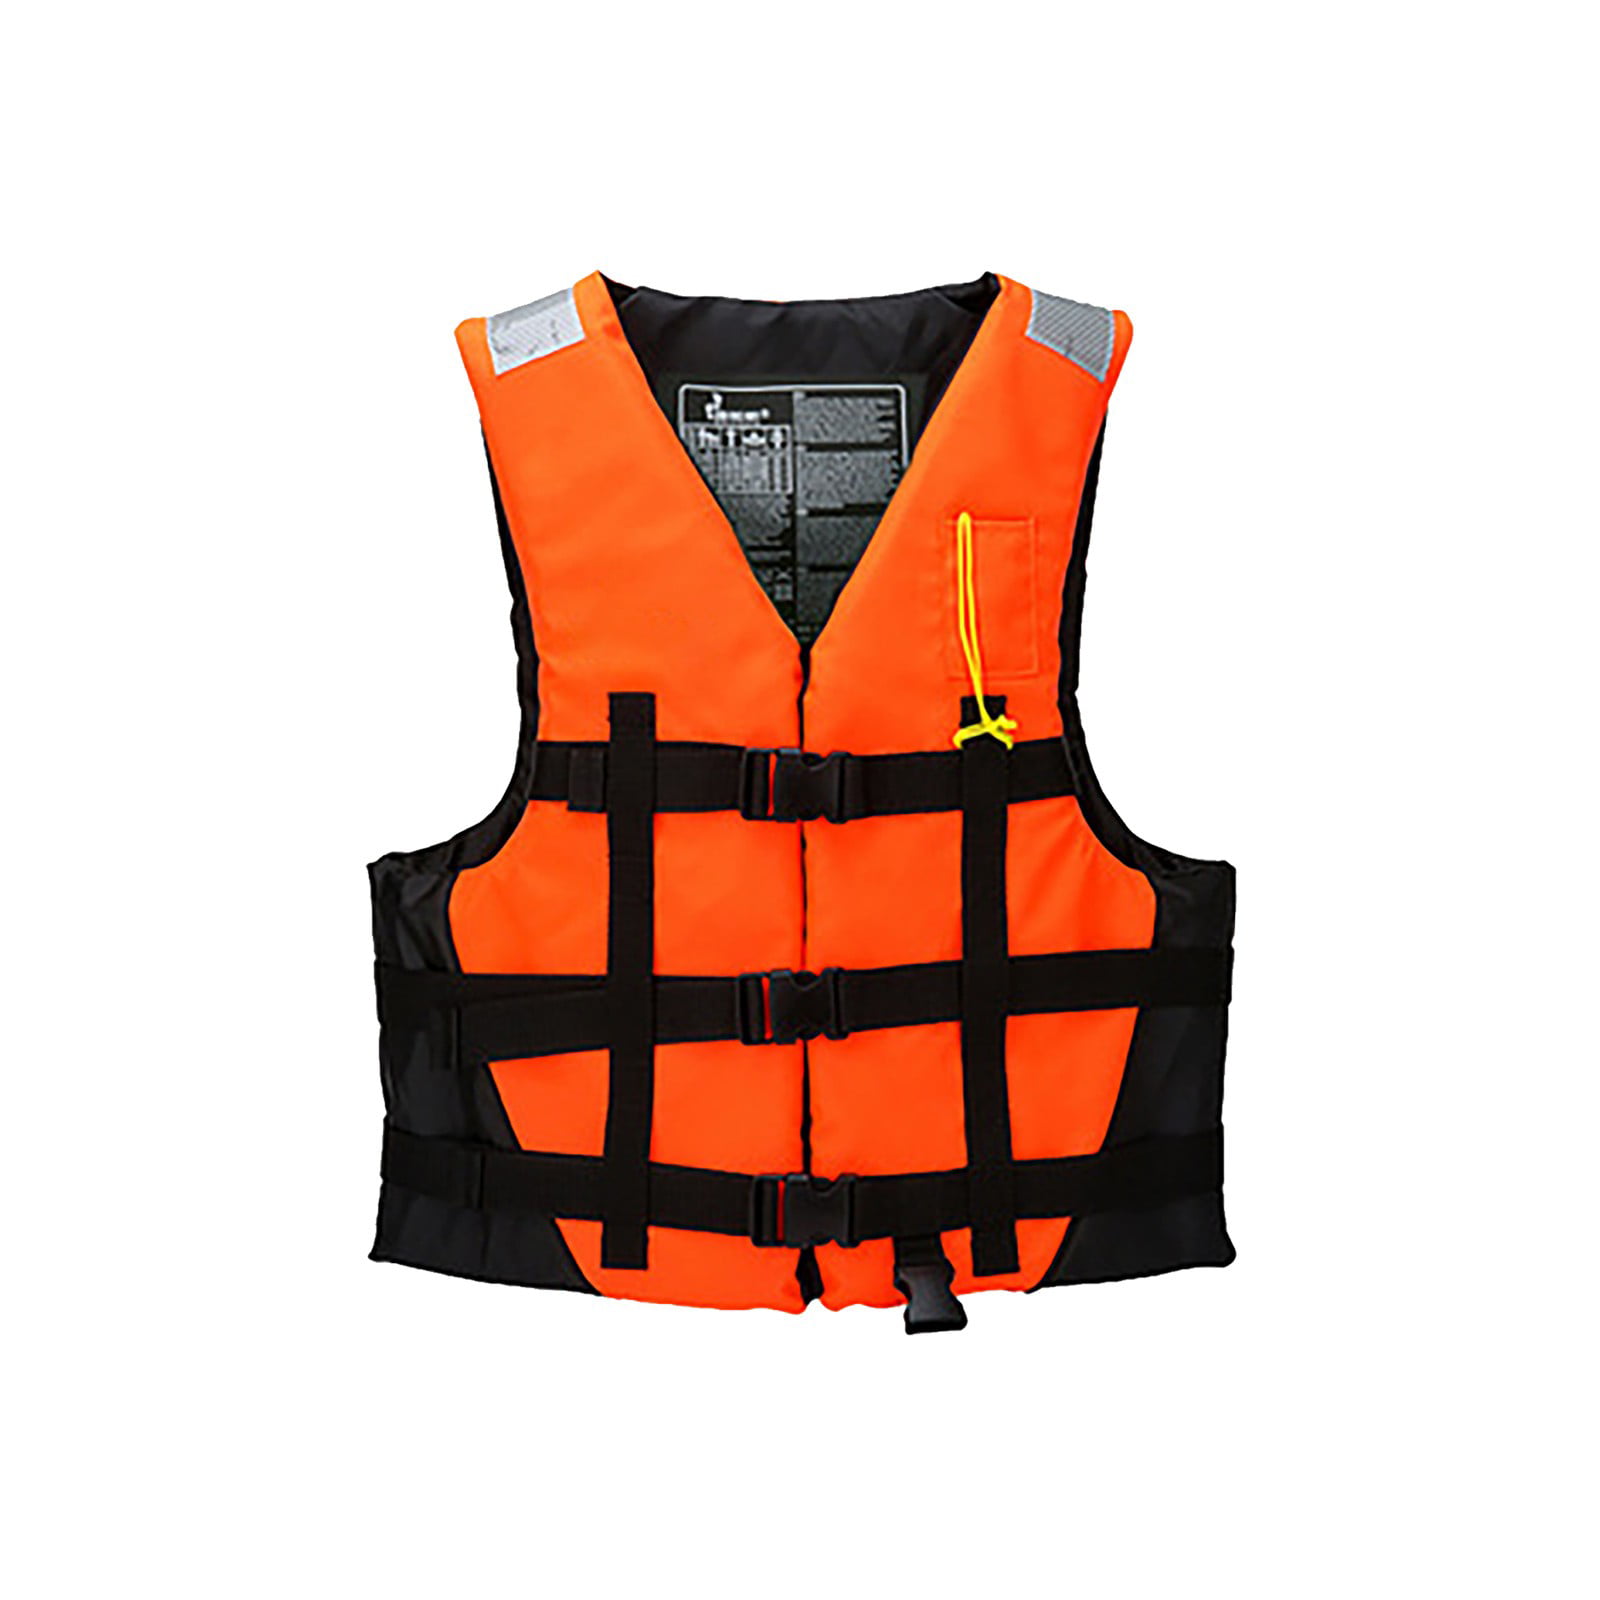 Hisea Adult Life Jacket Kayak Ski Buoyancy Aid Vest Sailing Fishing Watersport1 